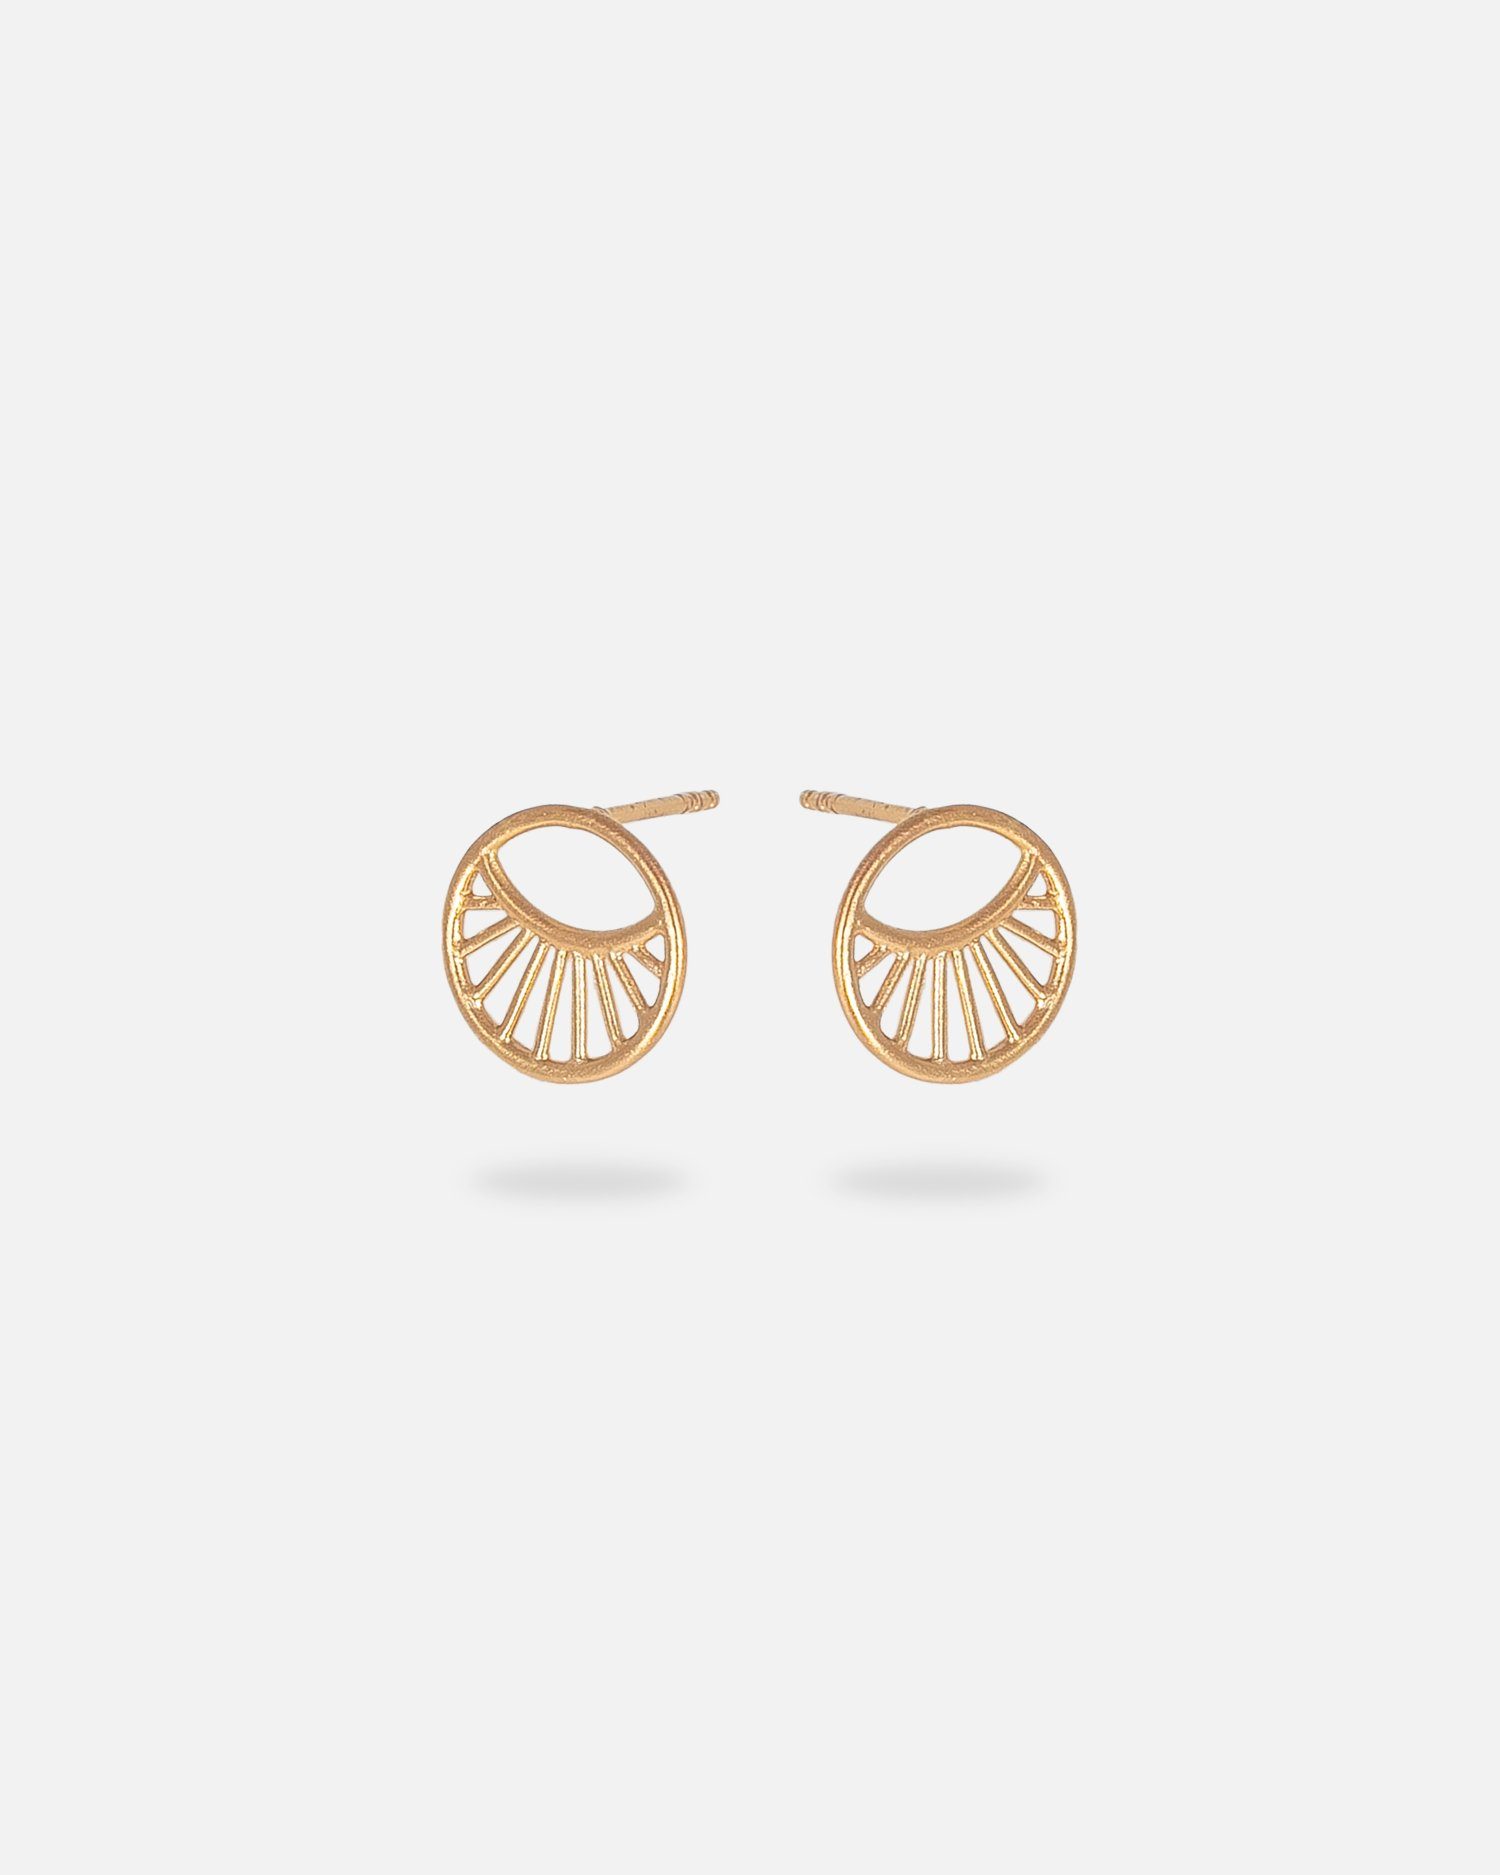 Pernille Corydon Paar Ohrstecker Daylight Ohrringe Damen 1,1 cm, Silber 925, 18 Karat vergoldet | Ohrstecker